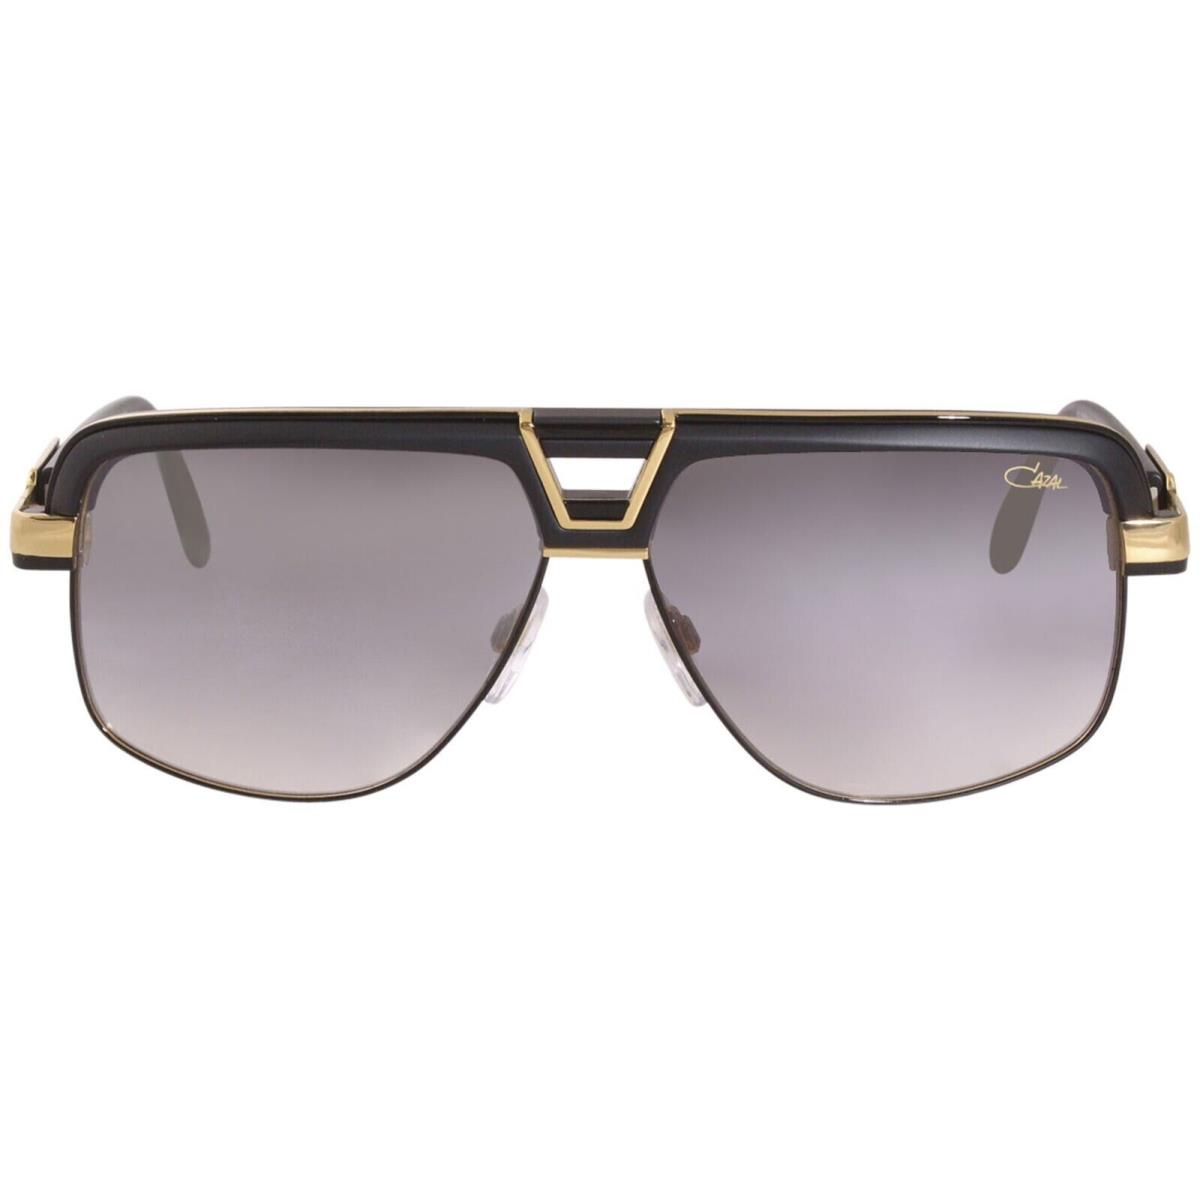 Cazal 991 Col 002 Sunglasses Eyewear Grey Lens Germany